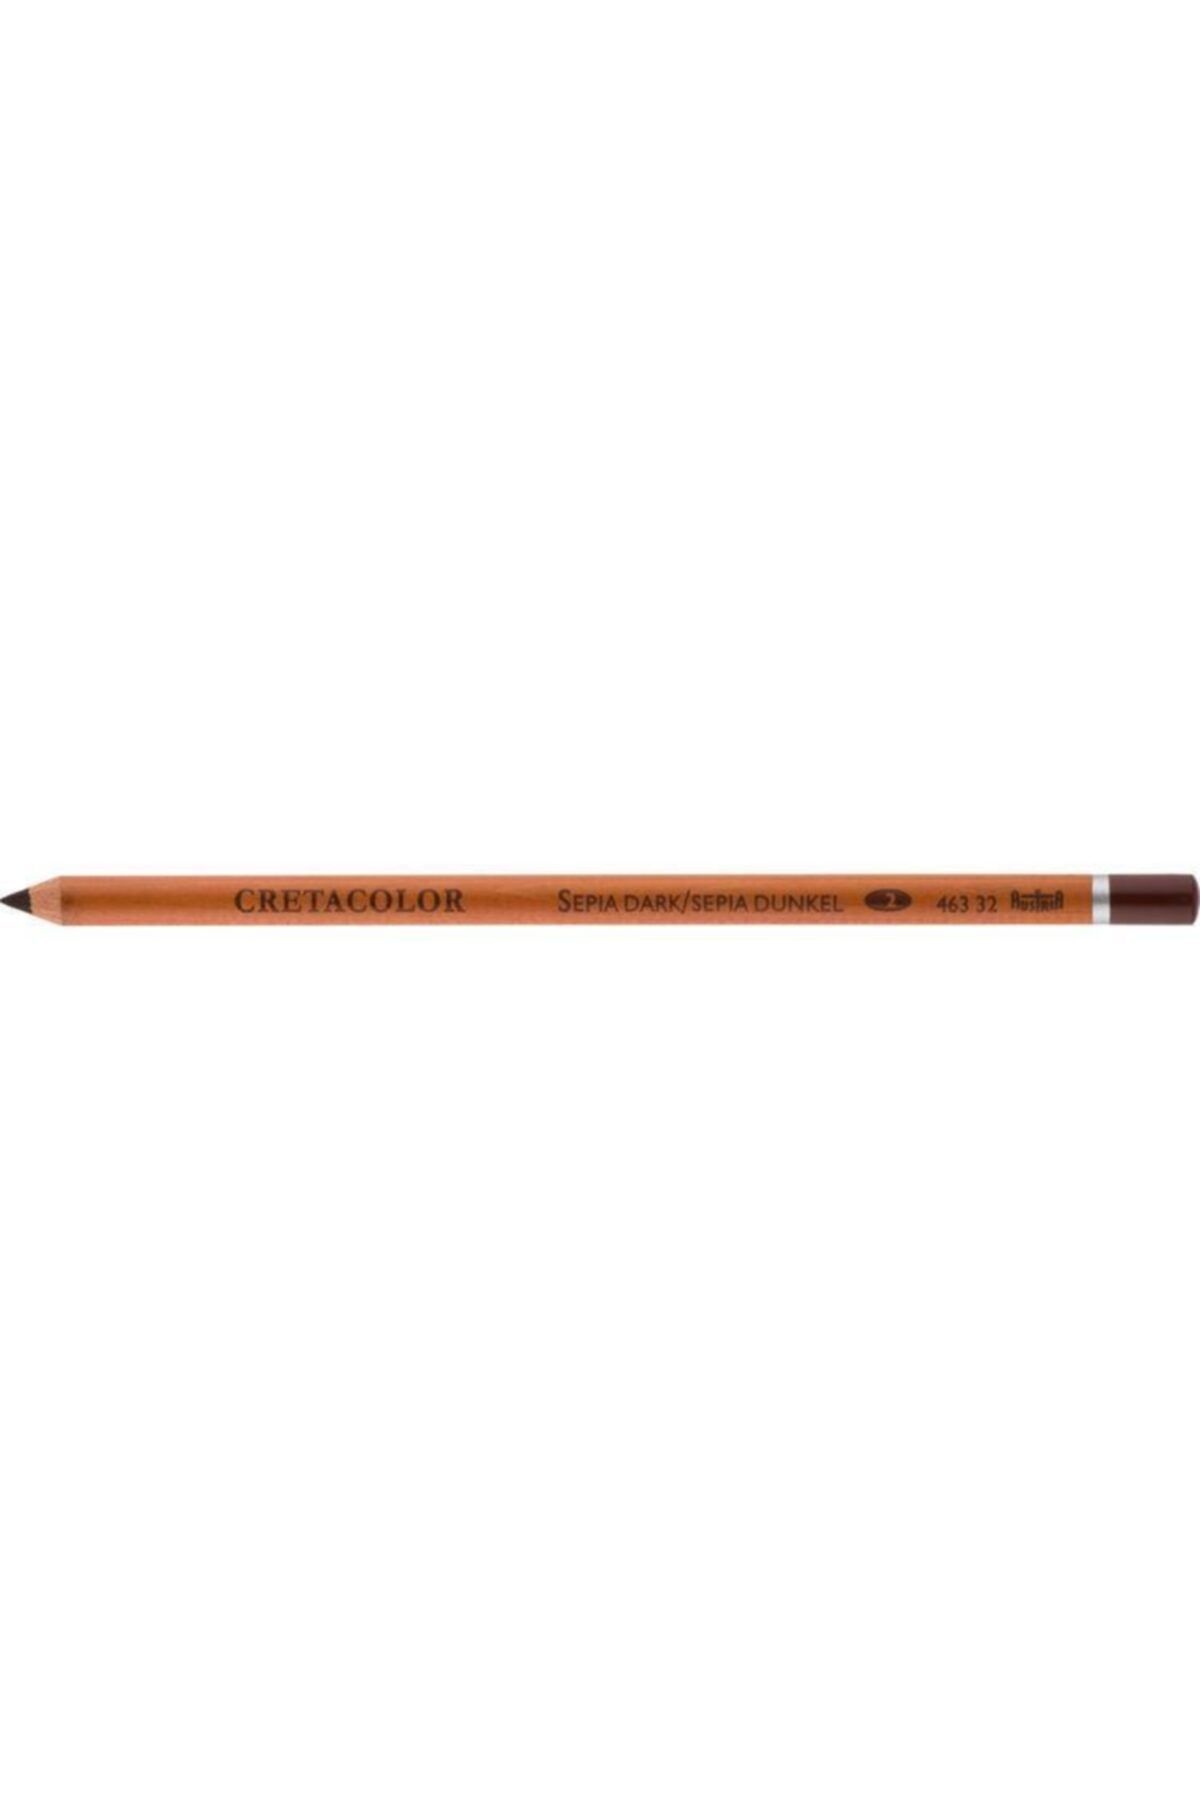 CretaColor Sepia Dark Dry Pencil Kuru Tebeşir Kalemi (463 32)